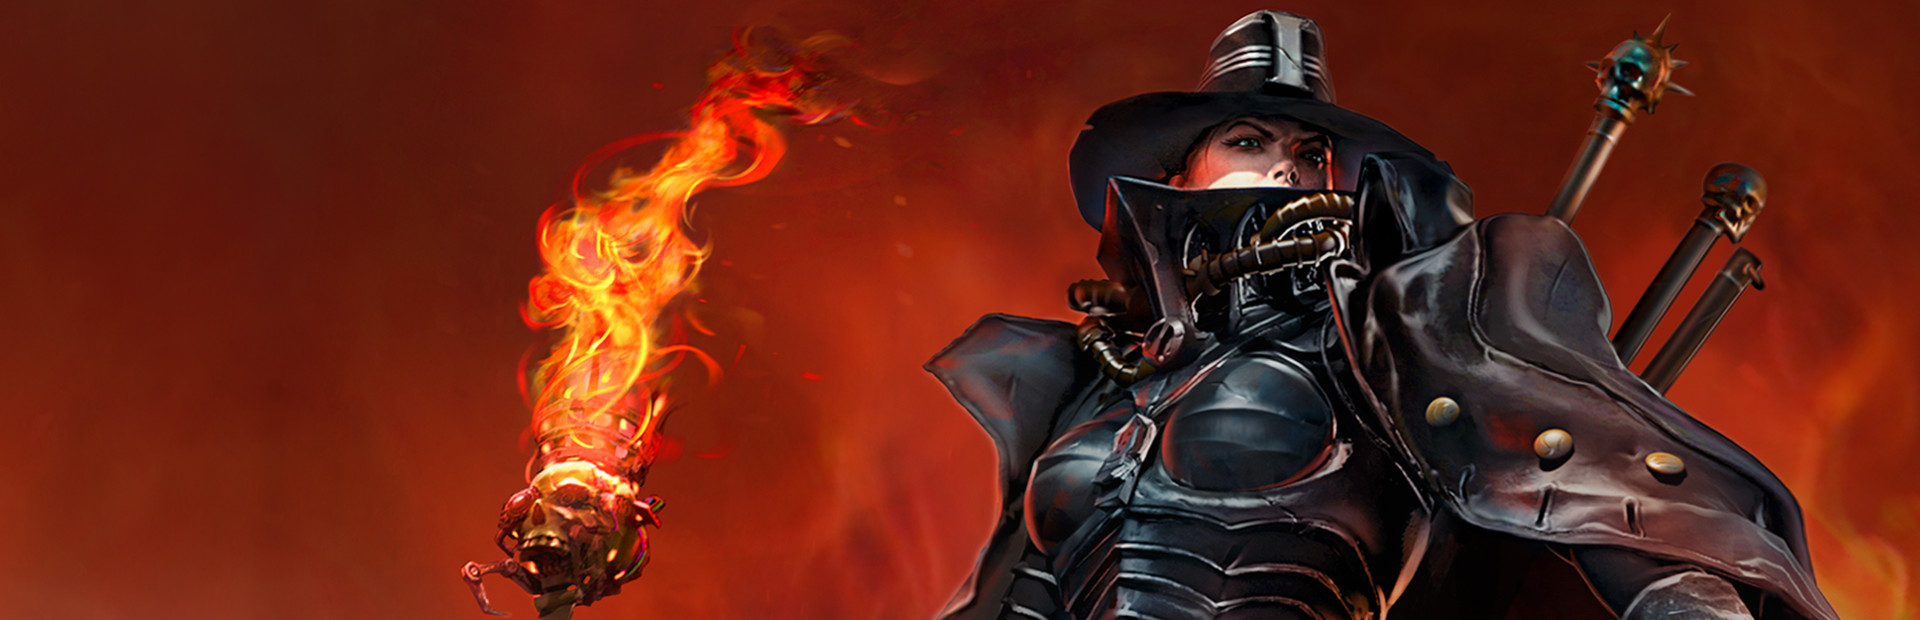 Warhammer 40,000: Dawn of War II: Retribution cover image